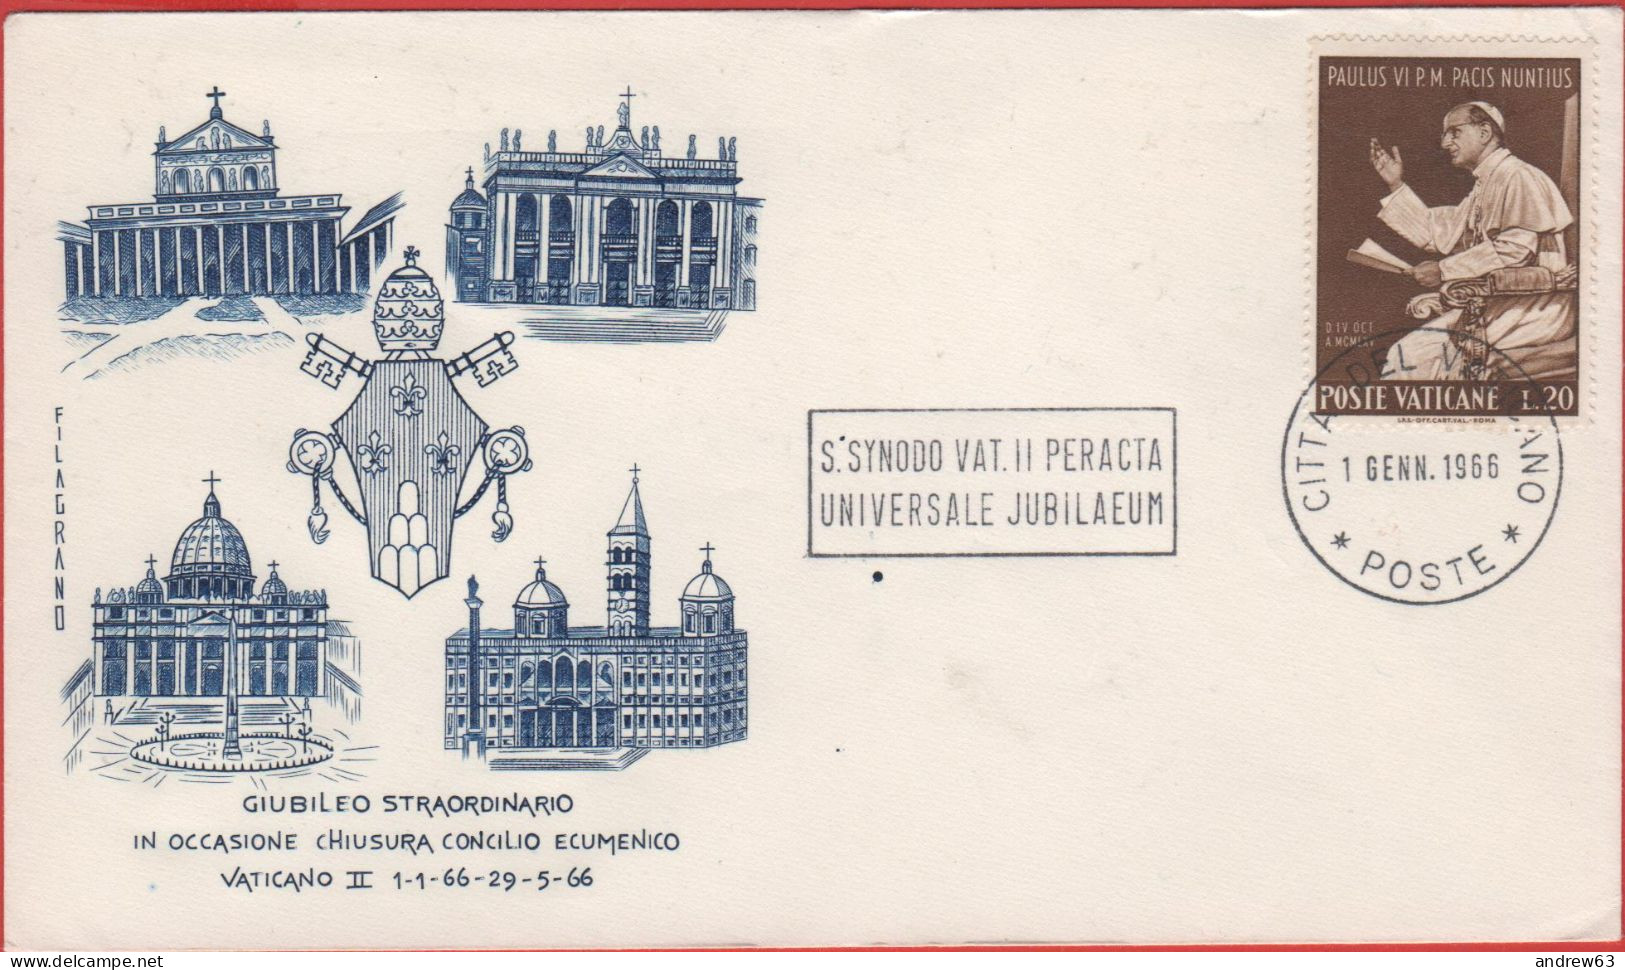 Vaticano - Vatican - Vatikan - 01.01.1966 - Giubileo Straordinario In Occasione Chiusura Concilio Ecumenico Vaticano II - Covers & Documents